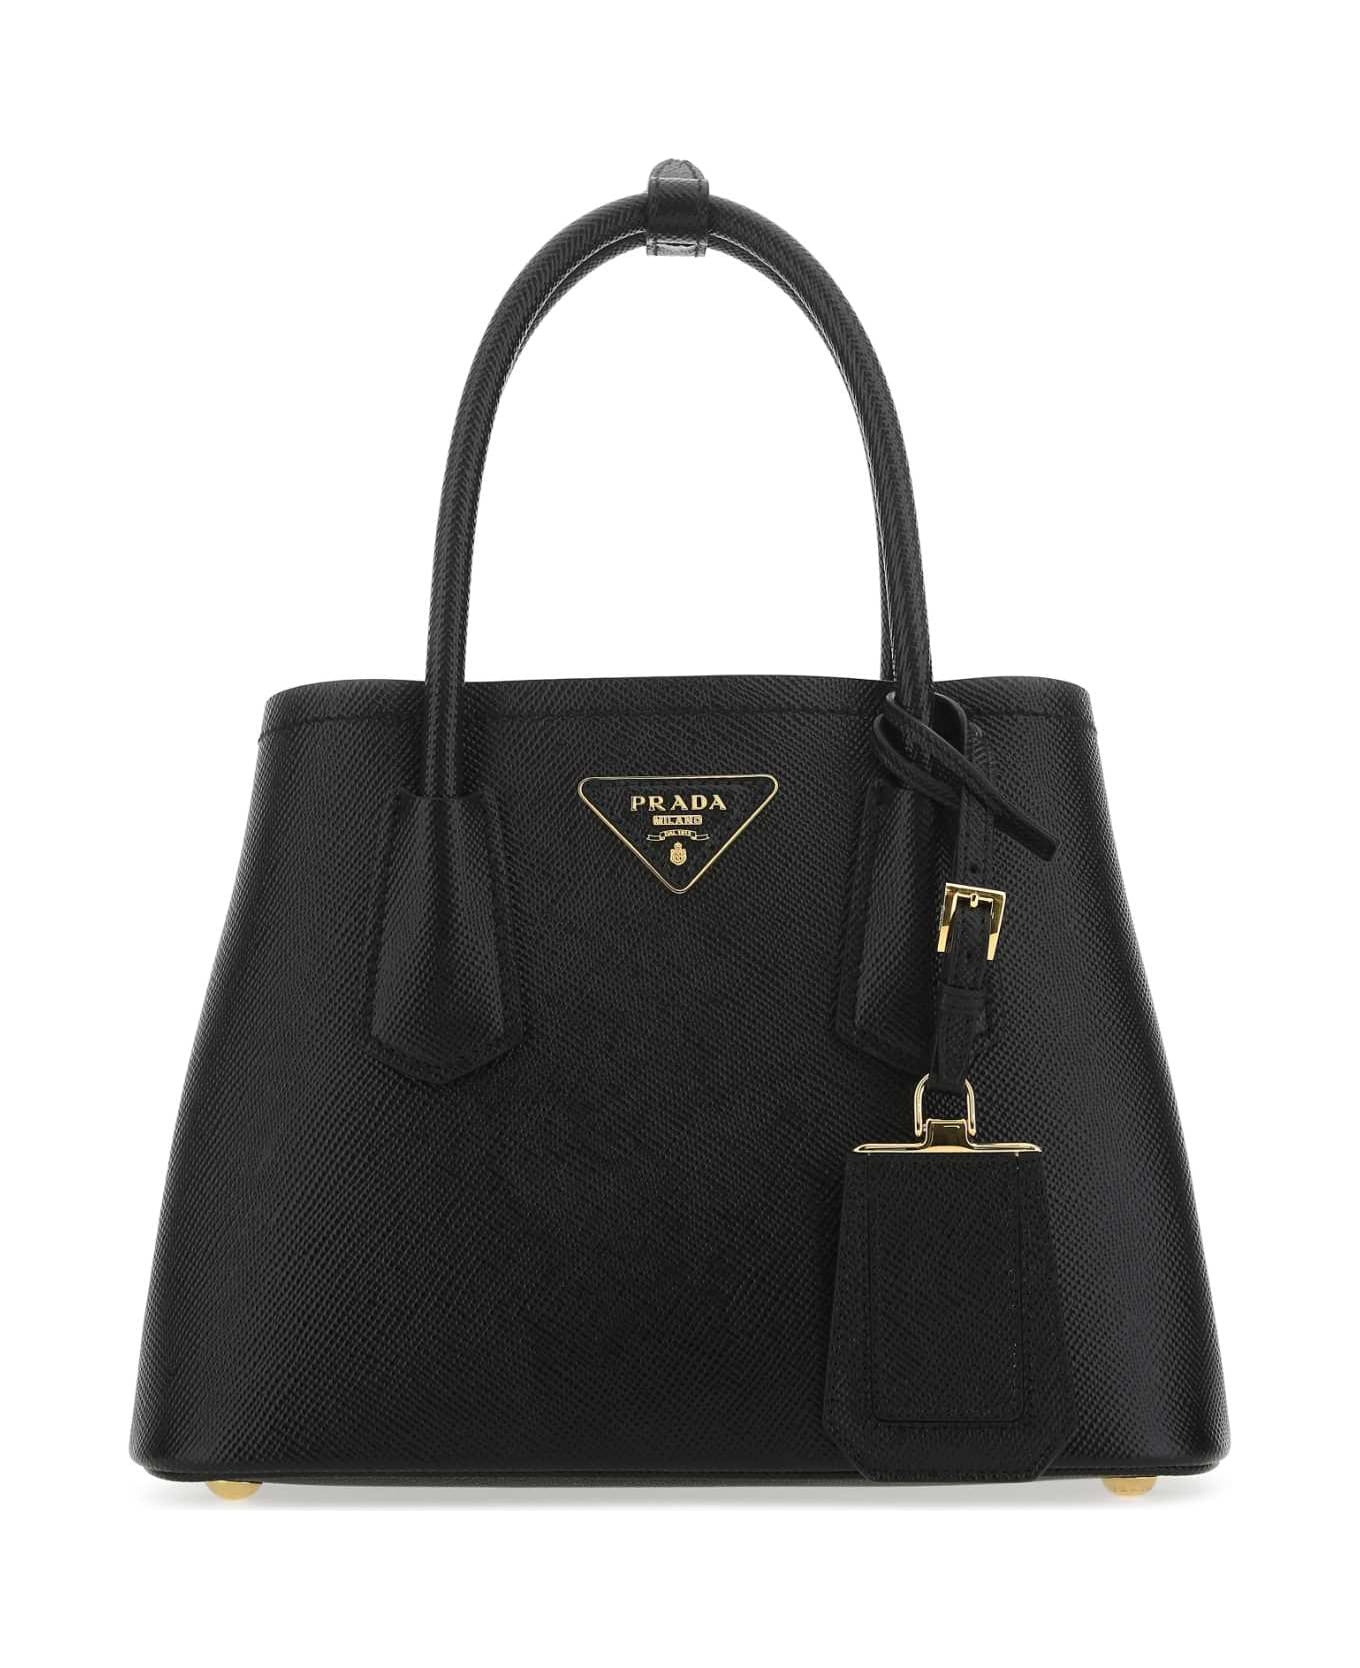 Prada Black Leather Handbag - Black トートバッグ